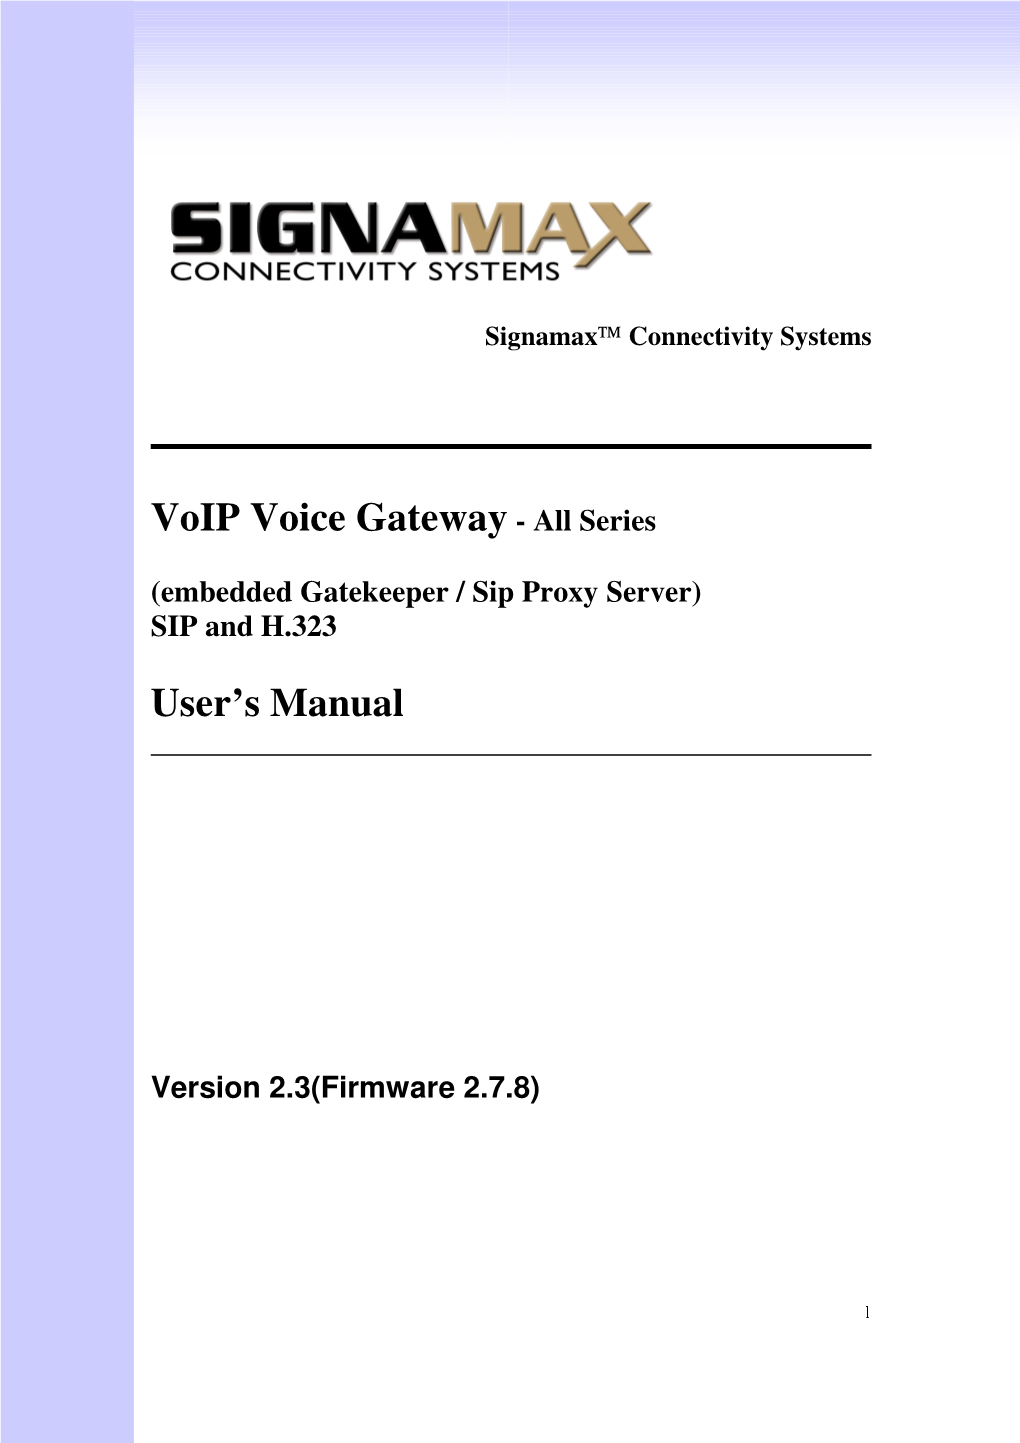 Voip Voice Gateway - All Series